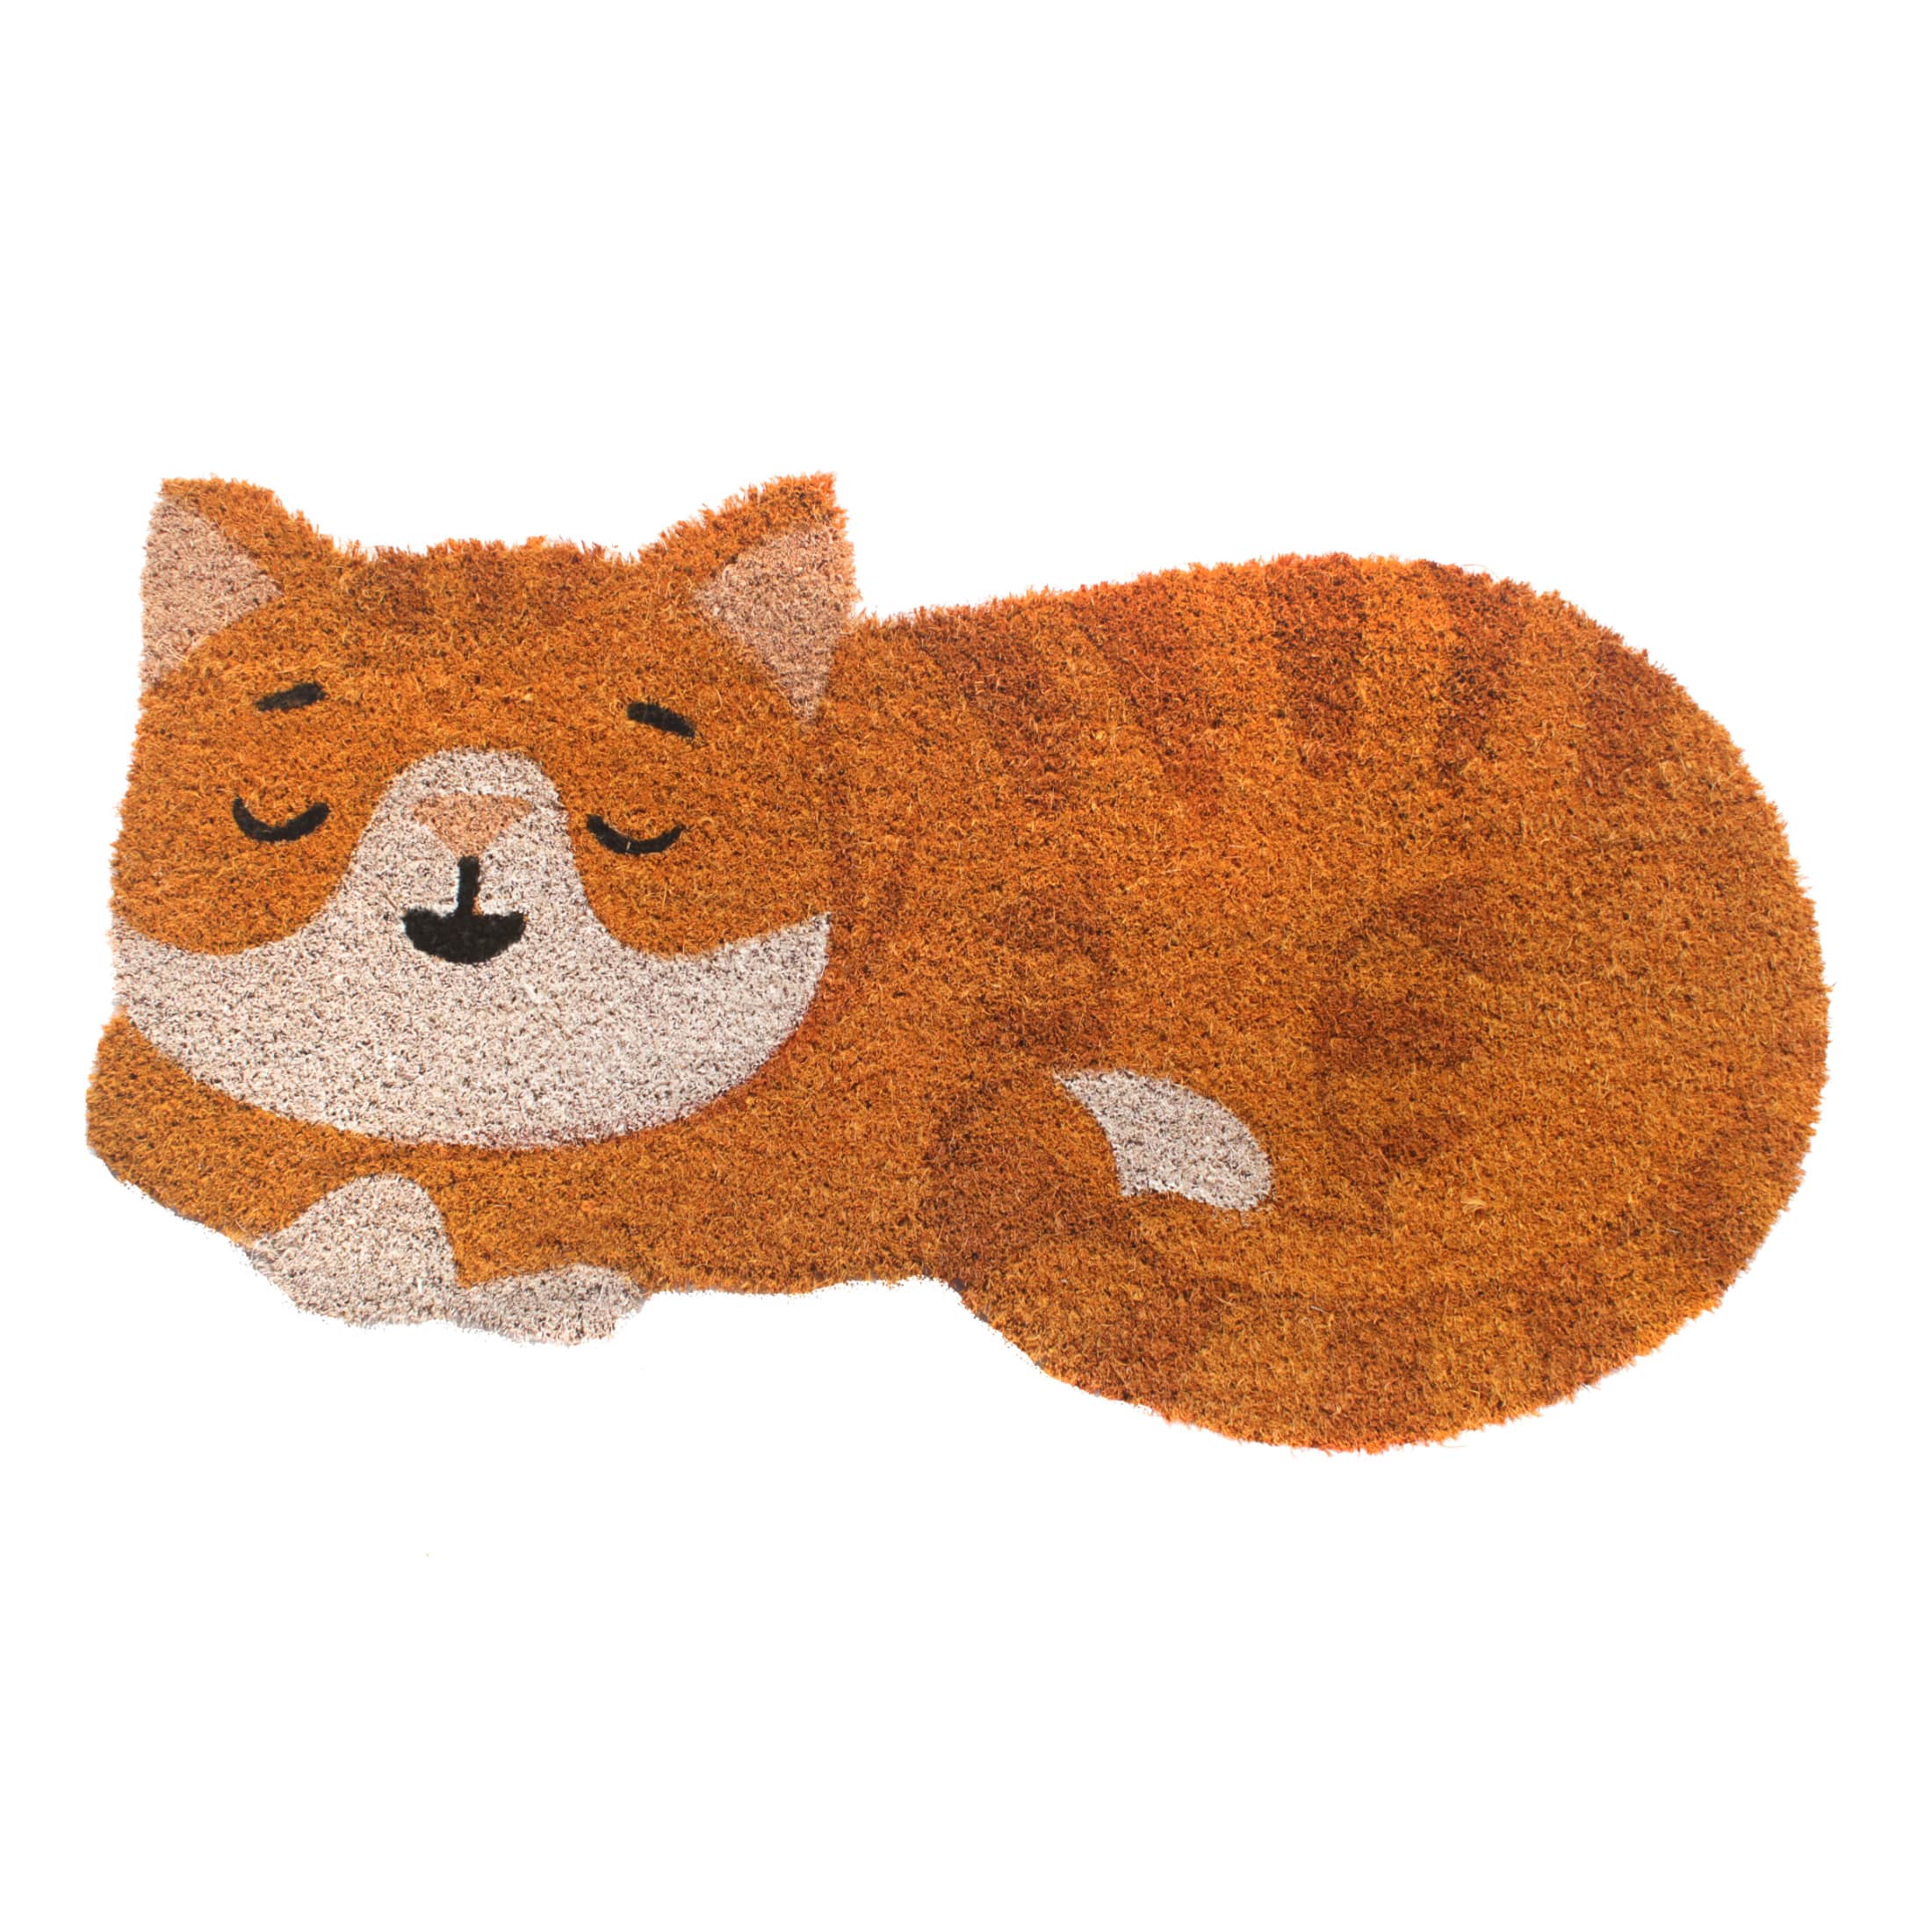 RugSmith Multicolor Machine Tufted Orange Sleeping Cat Shaped Doormat